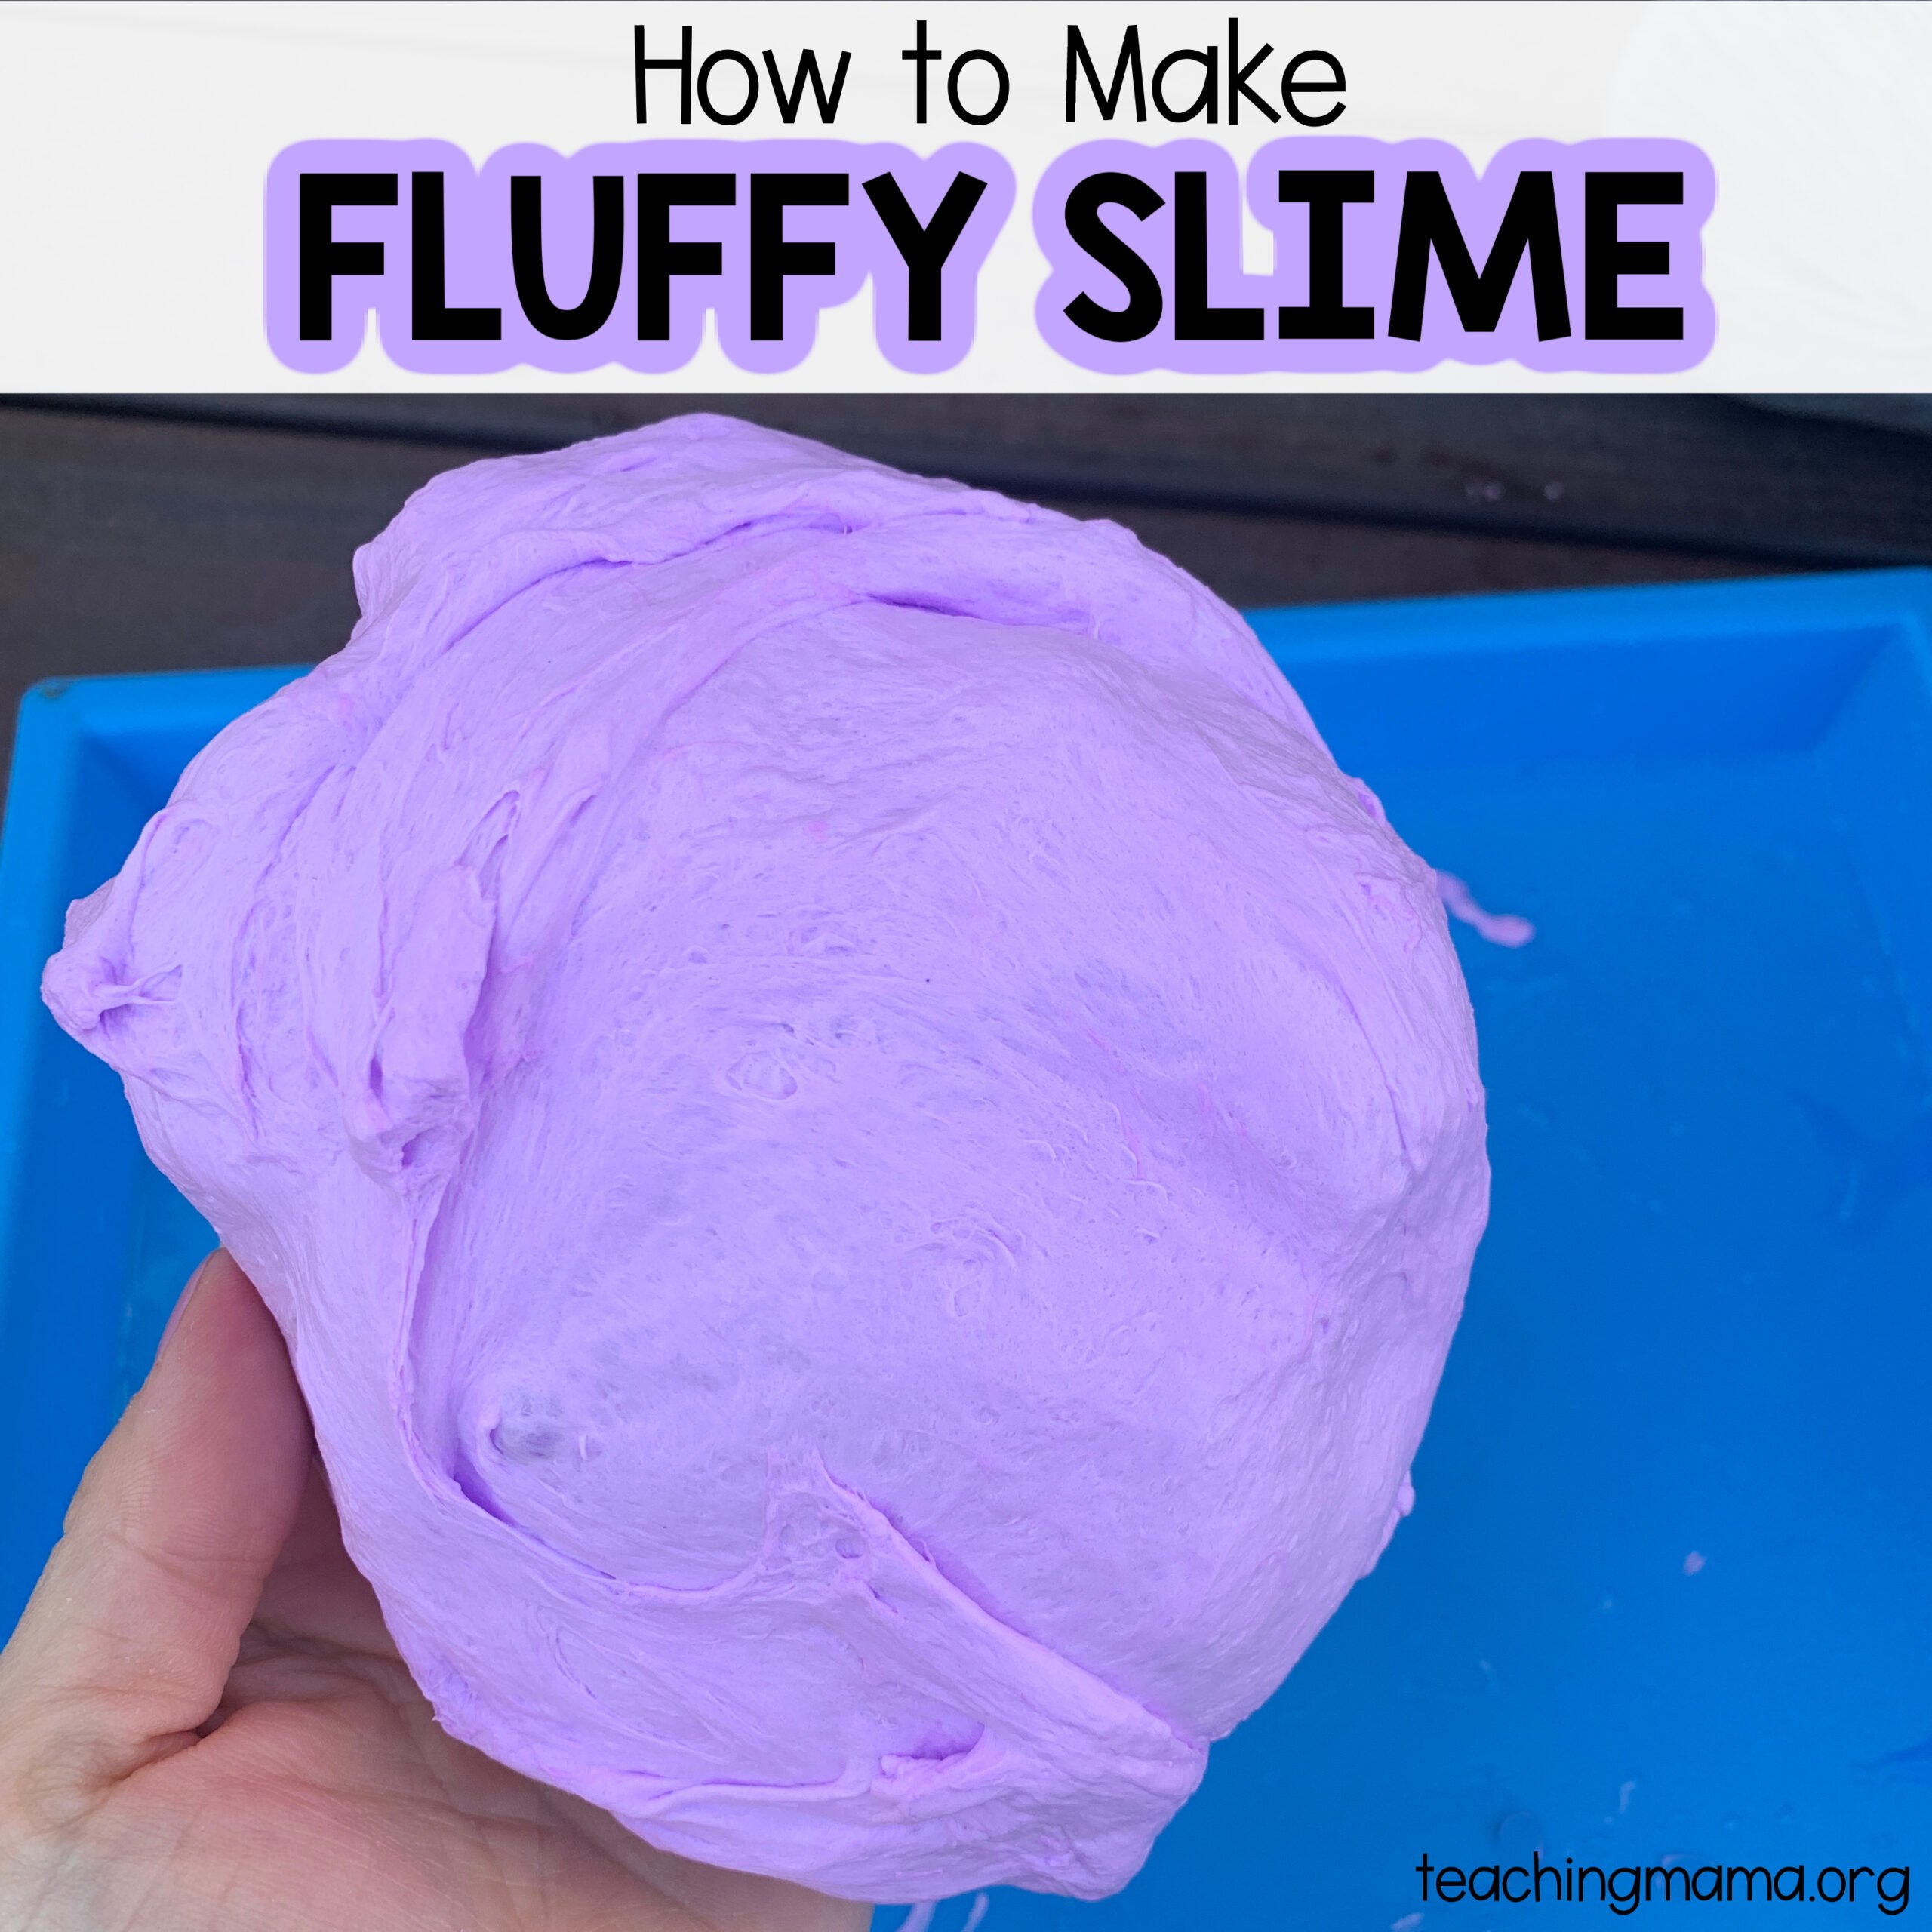 How to Make Slime: The Best & Easy DIY Fluffy Slime Recipe